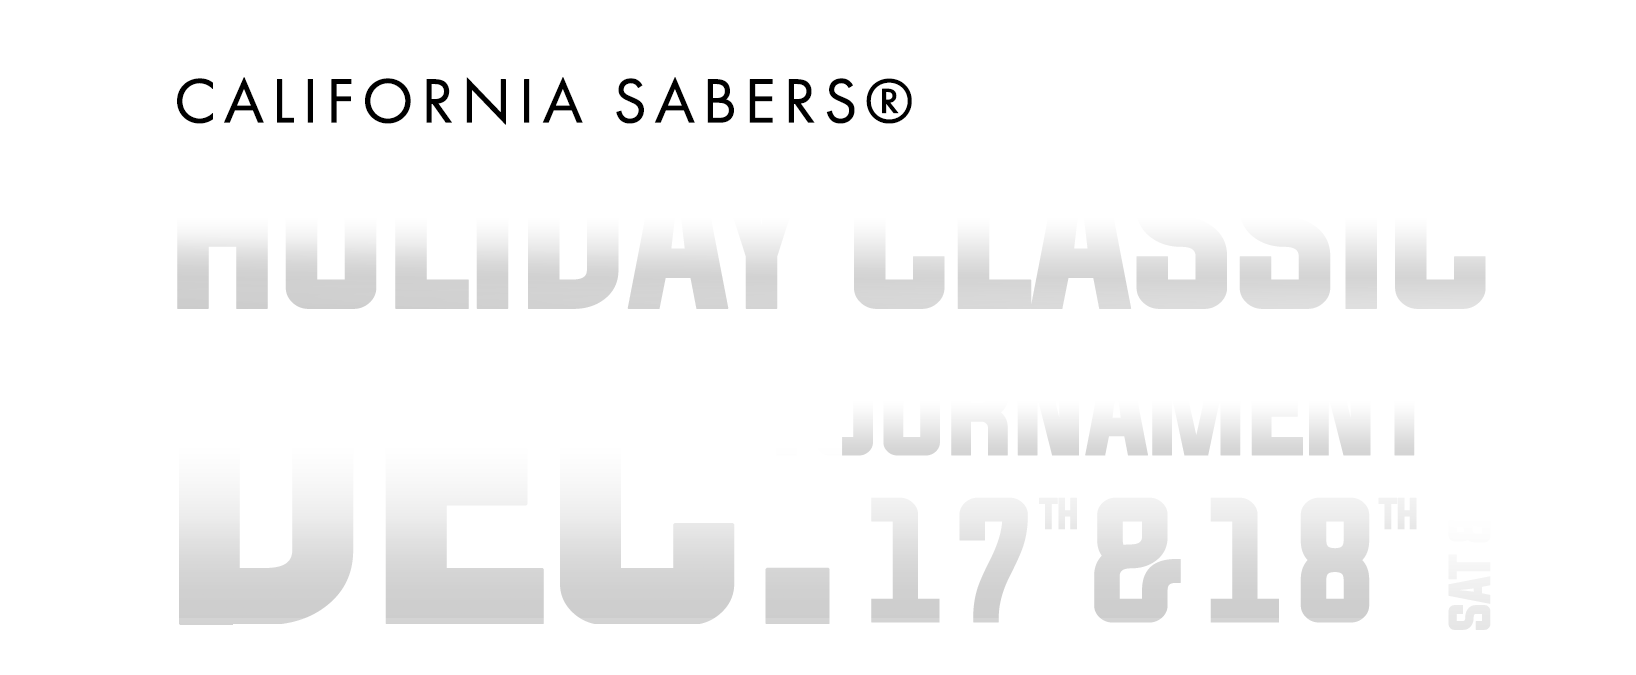 Murrieta Ca, Holiday Classic Flag Football Tournament 2022 - California Sabers - ©2022 Starke Football®